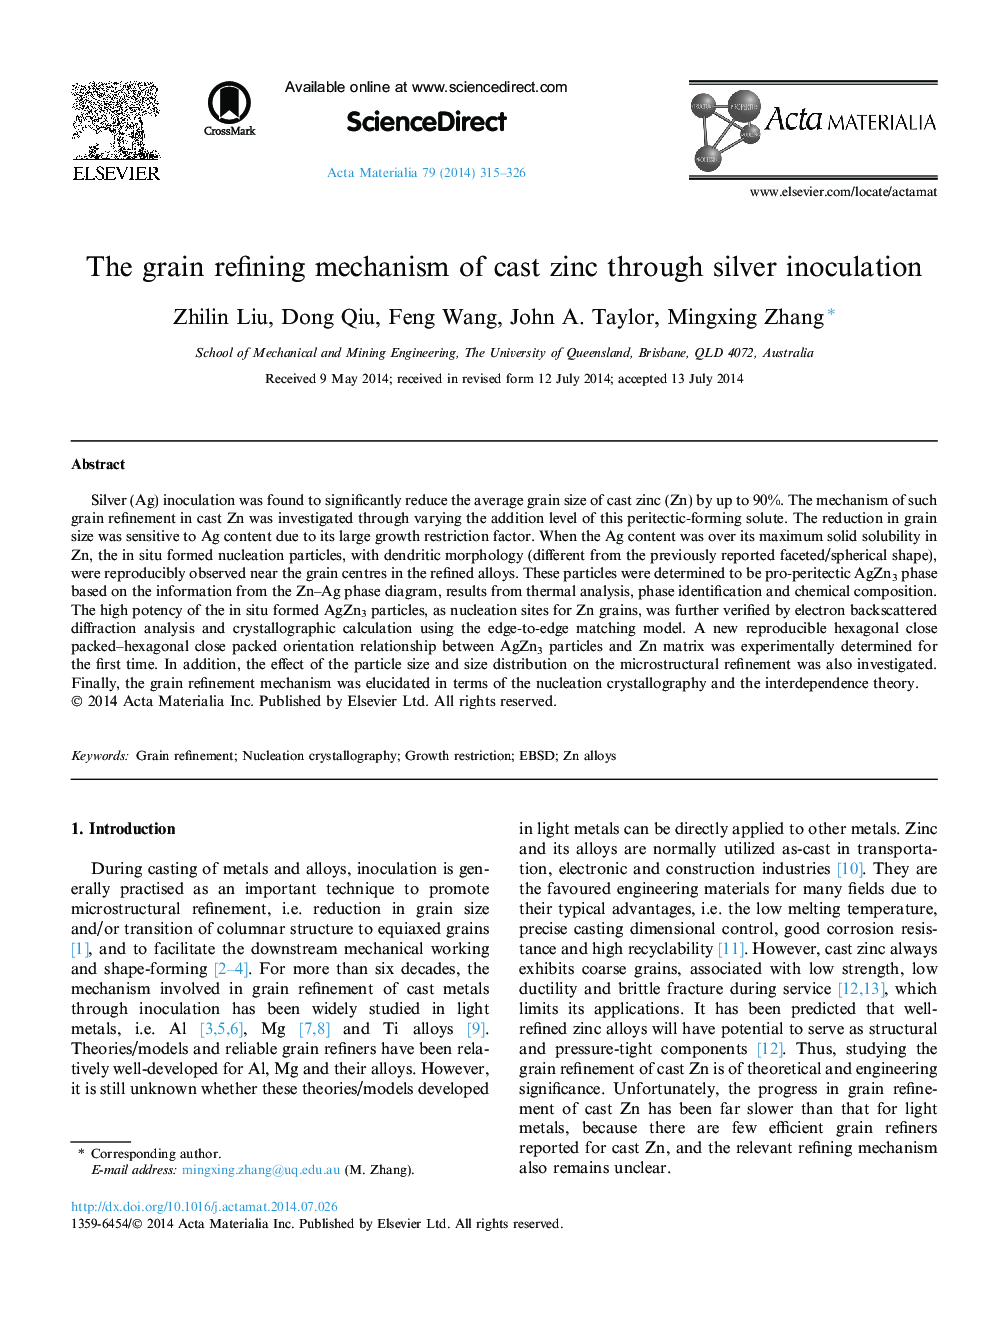 The grain refining mechanism of cast zinc through silver inoculation